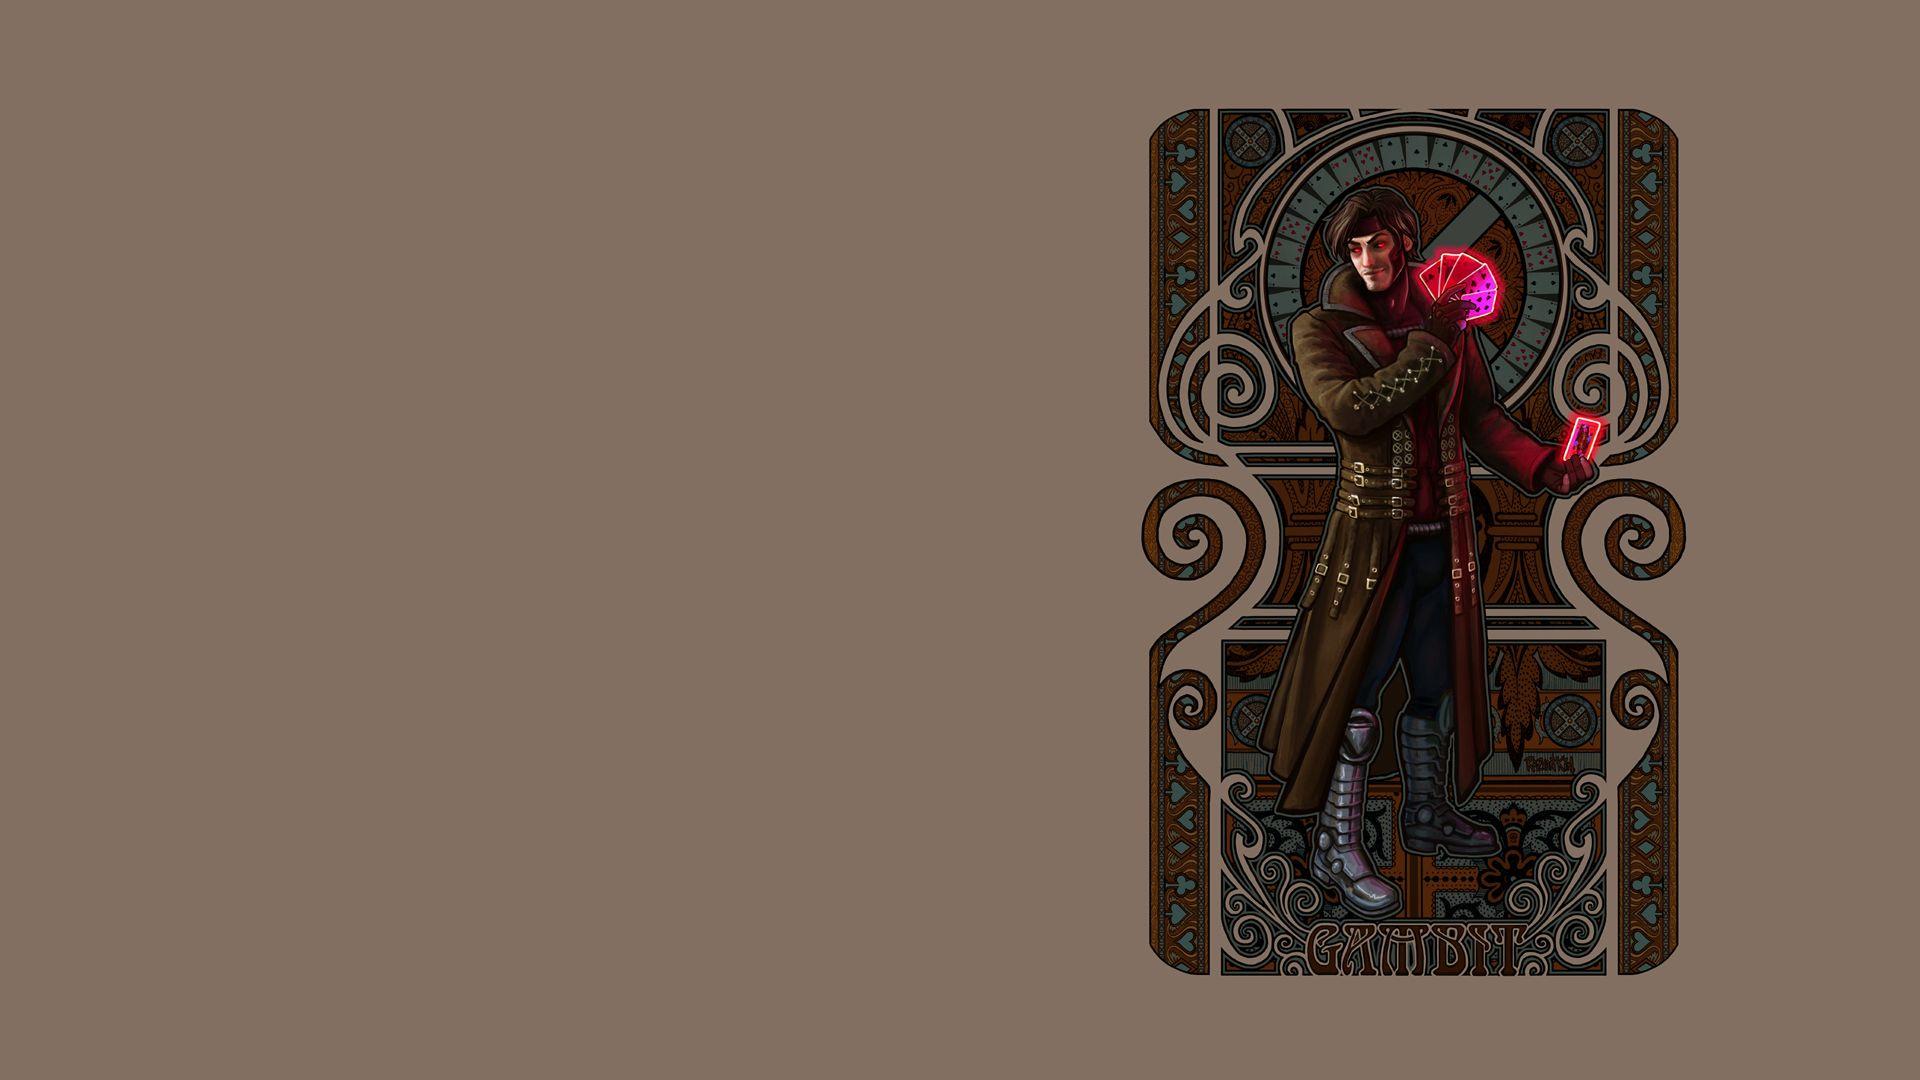 Gambit HD Wallpaper, Background Image